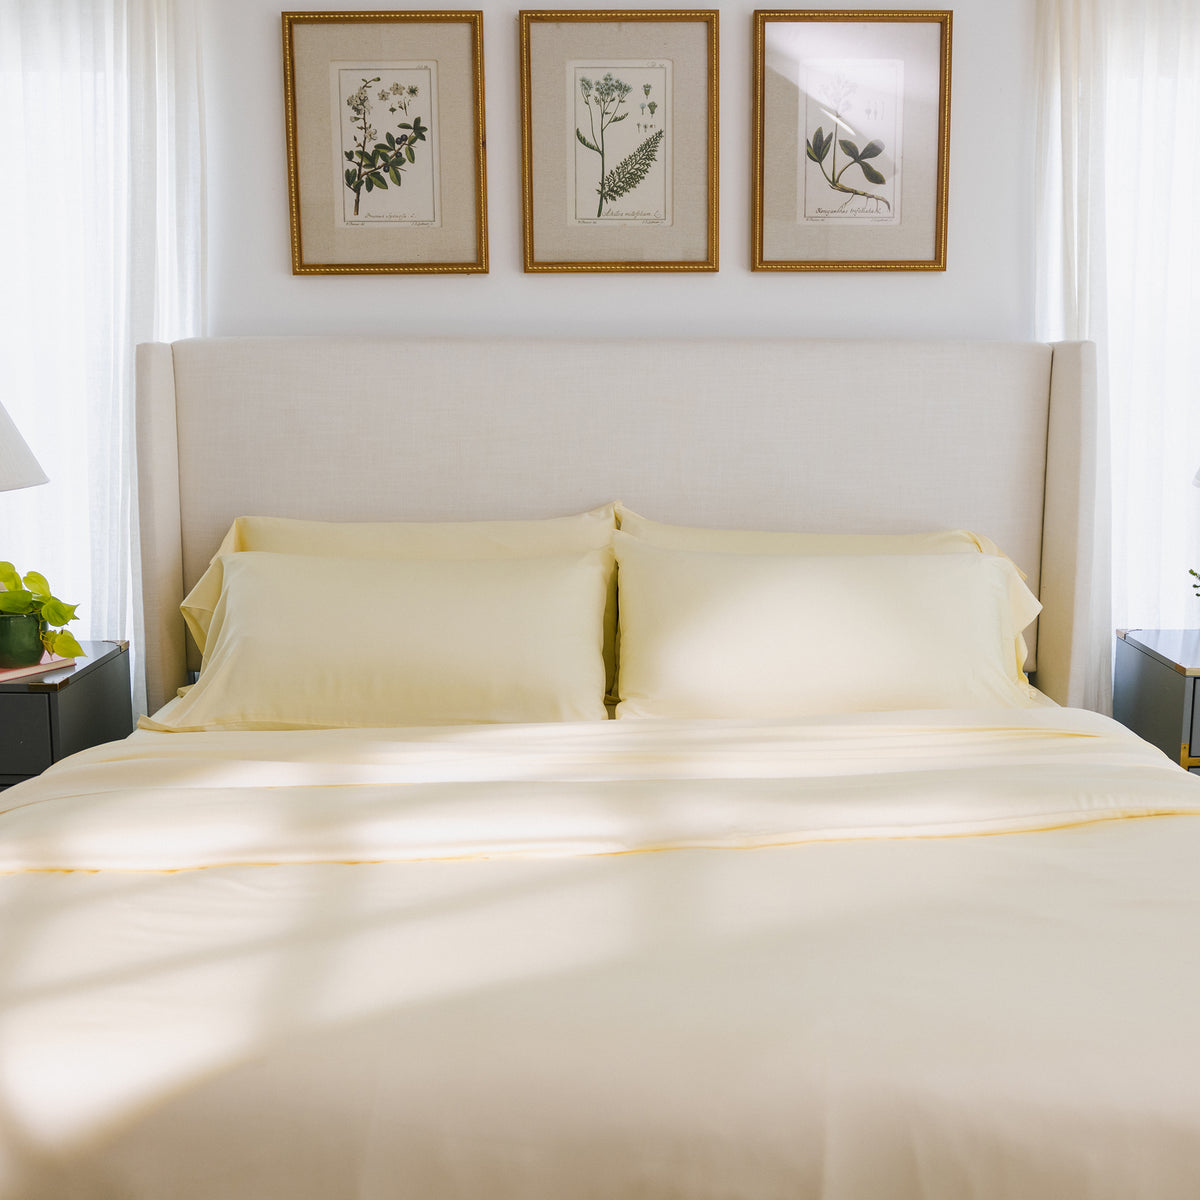 Bed with Lemonade duvet cover and sheet set |Color:Lemonade